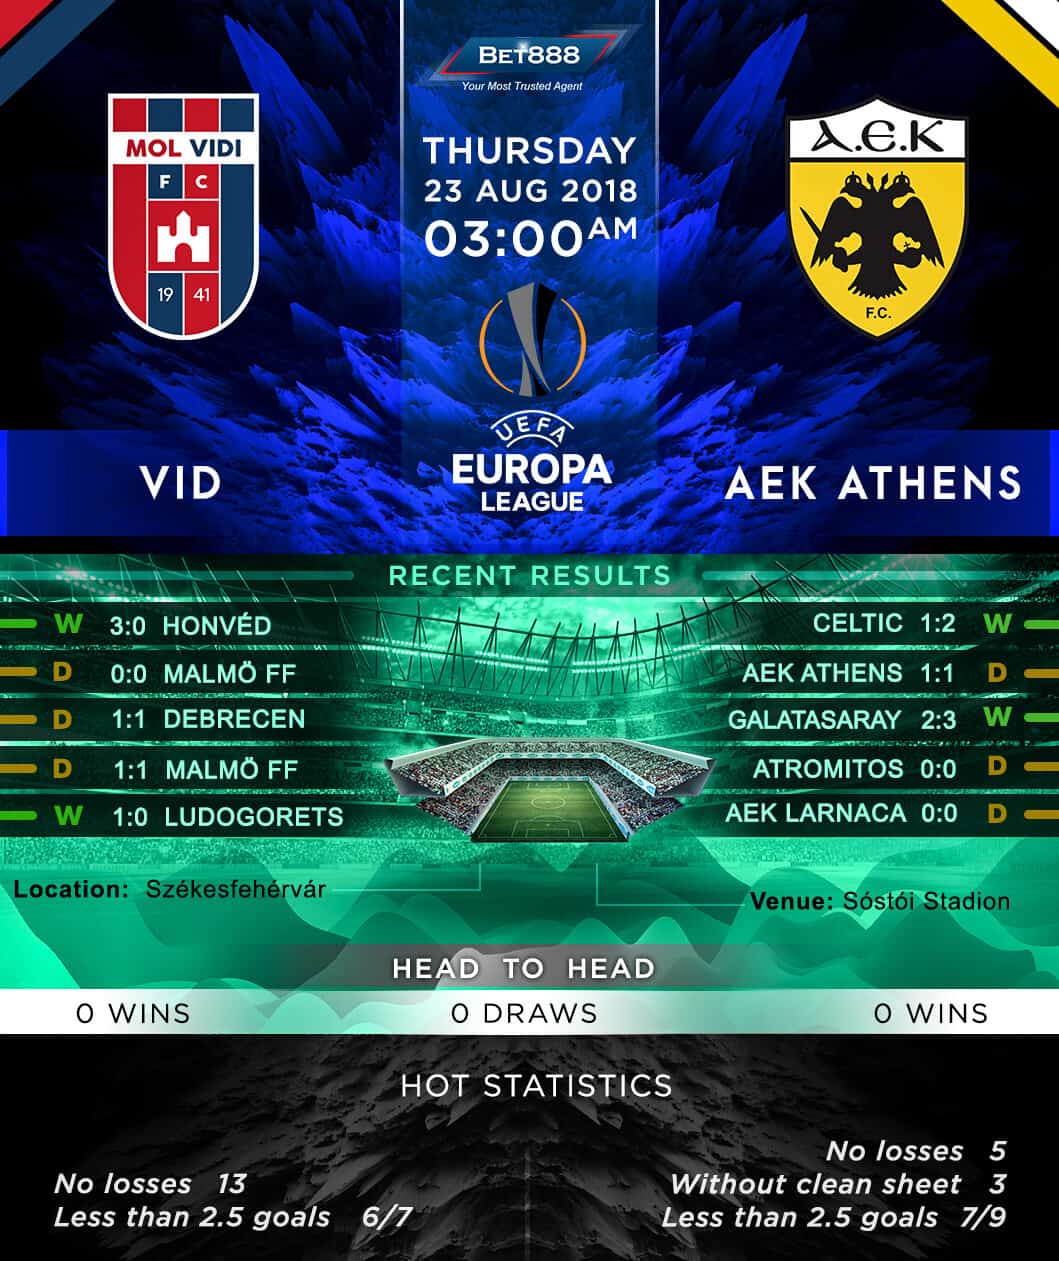 MOL Vidi vs AEK Athens 23/08/18